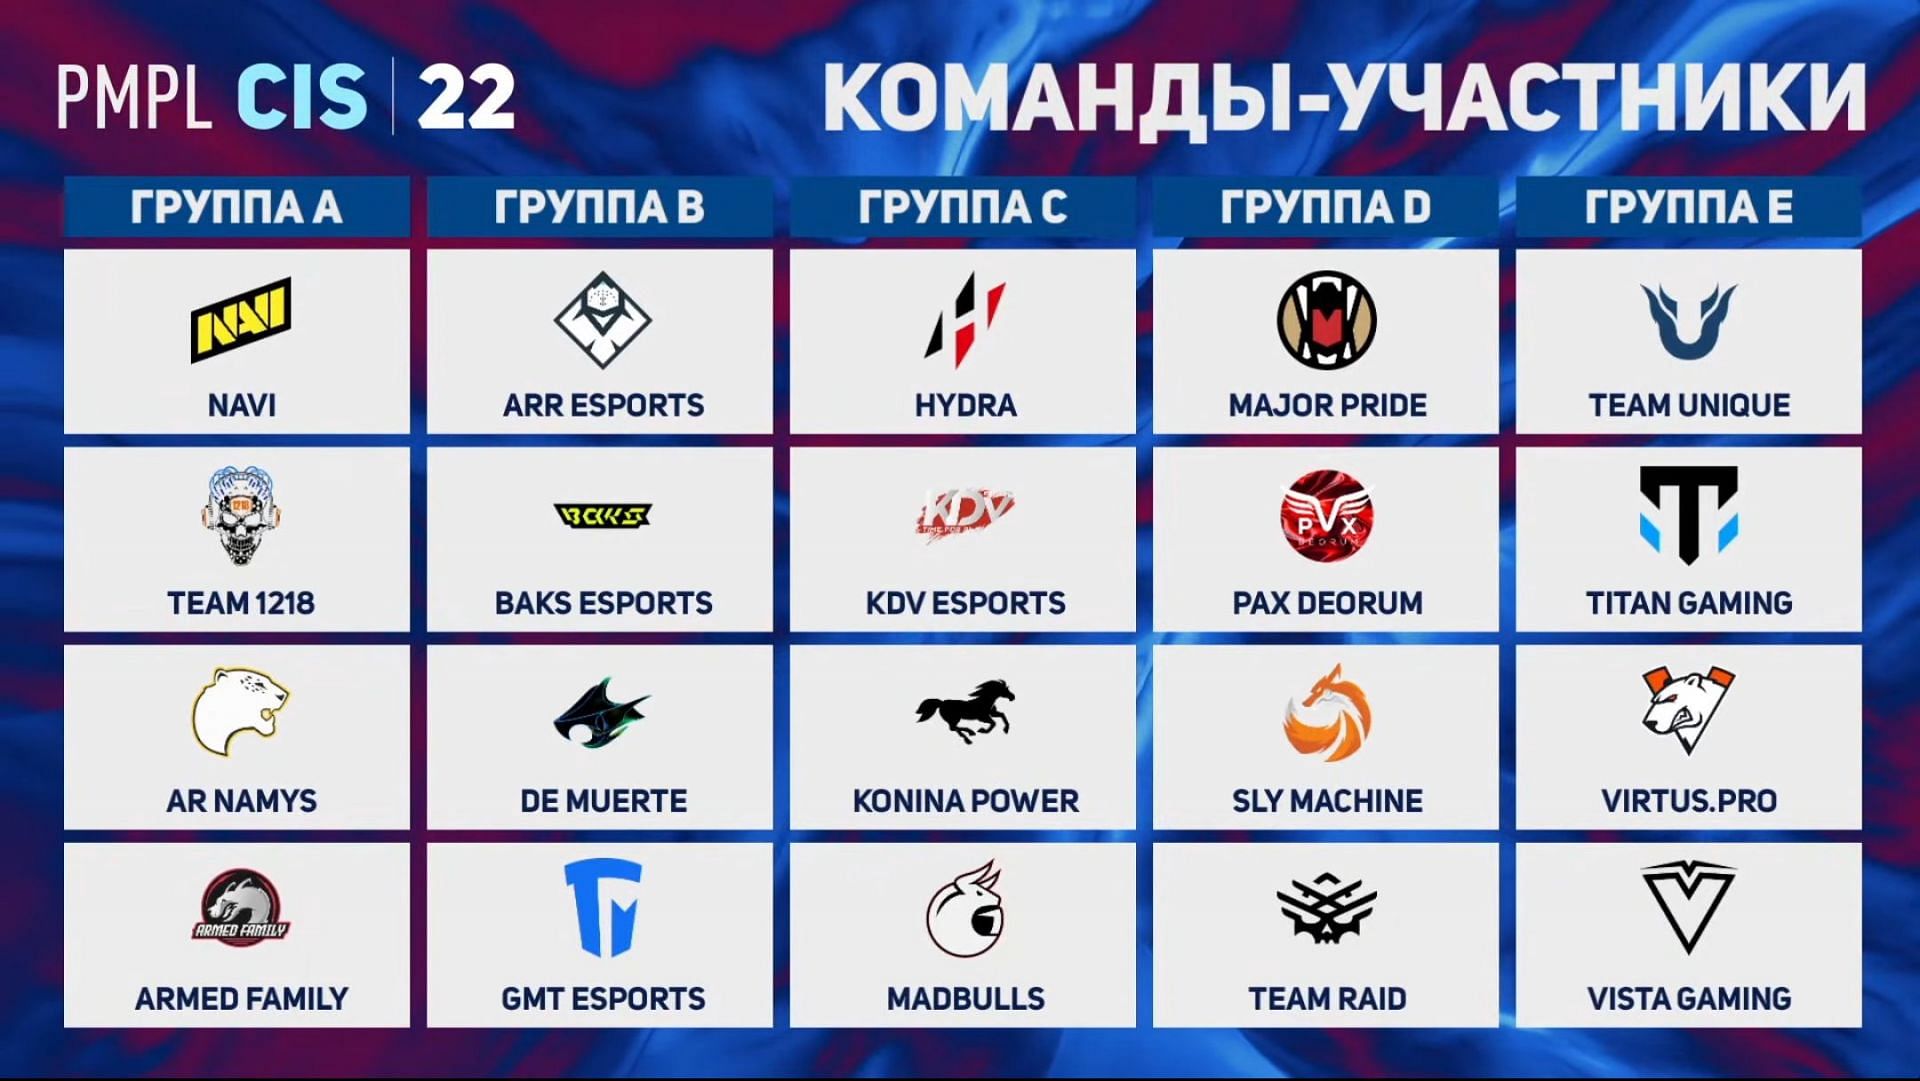 PMPL CIS 2022 Spring teams (Image via PUBG Mobile)